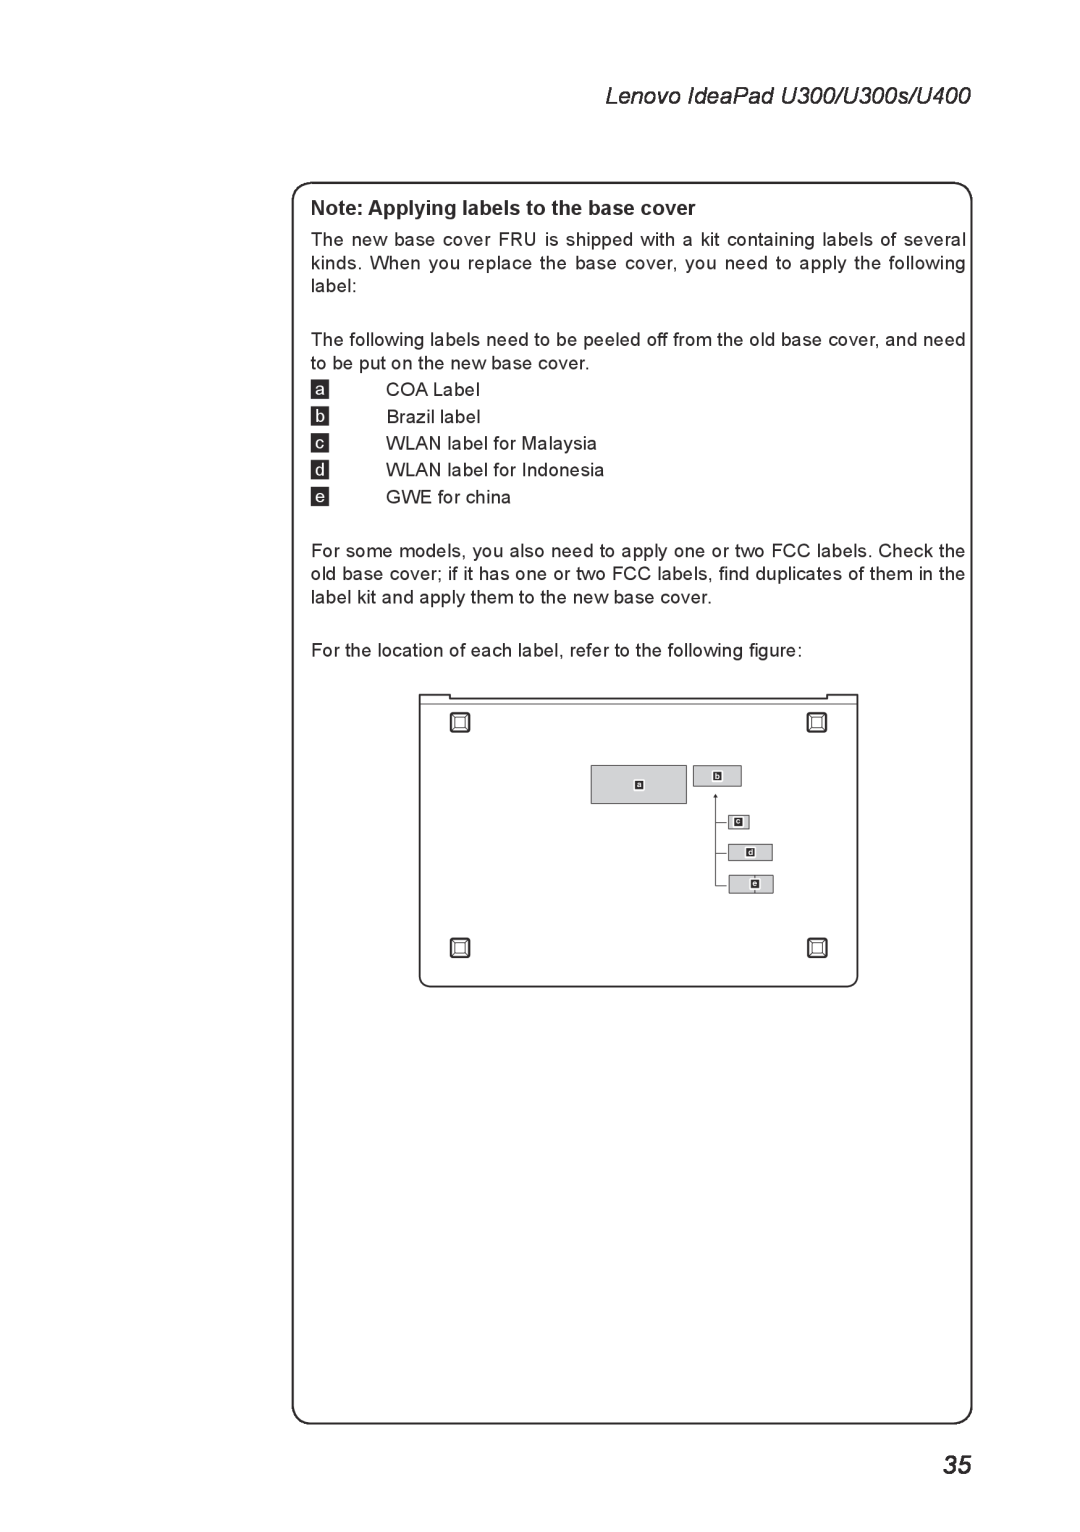 Lenovo U300S manual Note Applying labels to the base cover, Lenovo IdeaPad U300/U300s/U400 